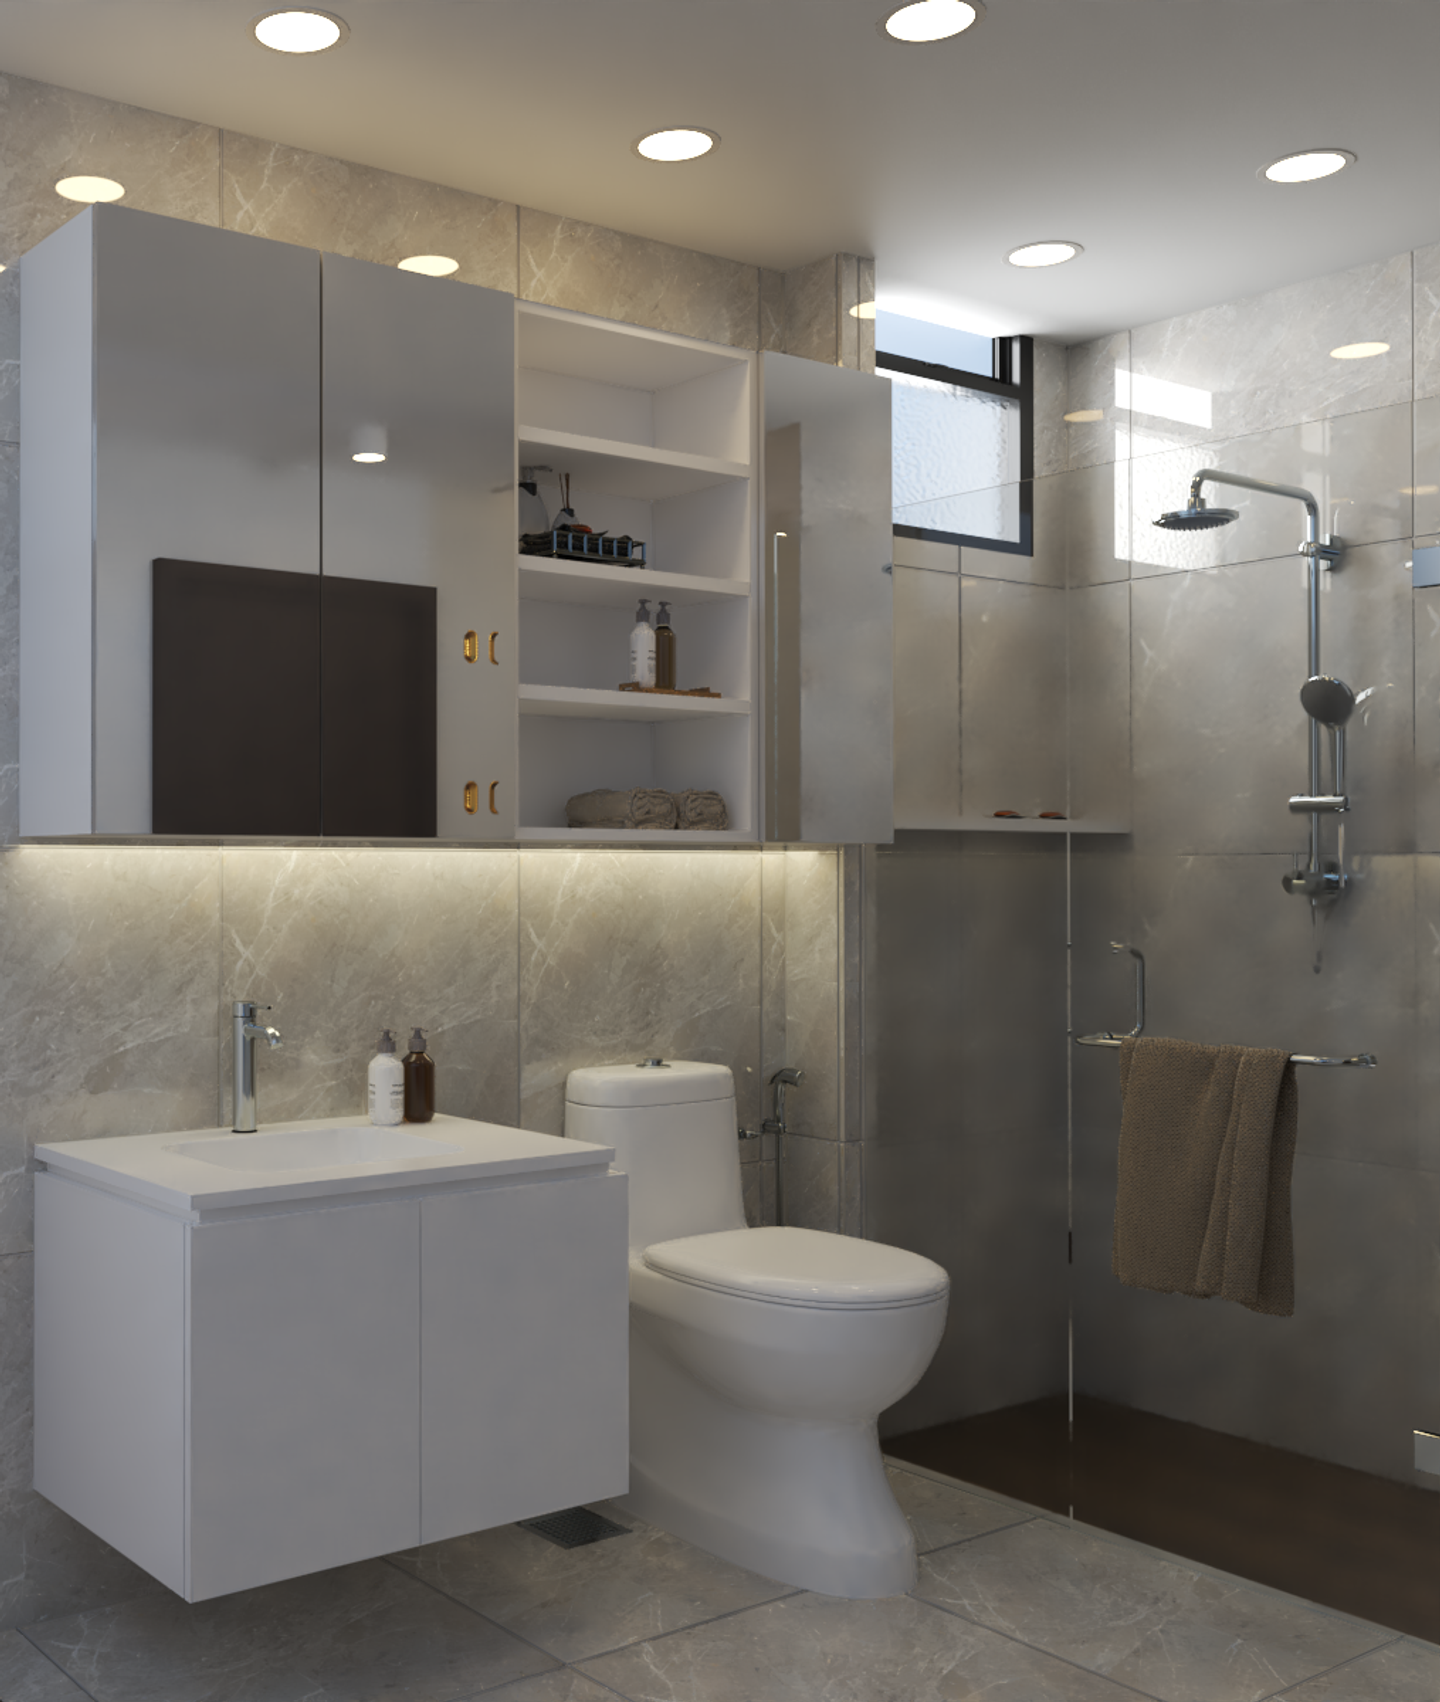 Open and Closed Storage Cabinets Mediterranean Bathroom Design - Livspace